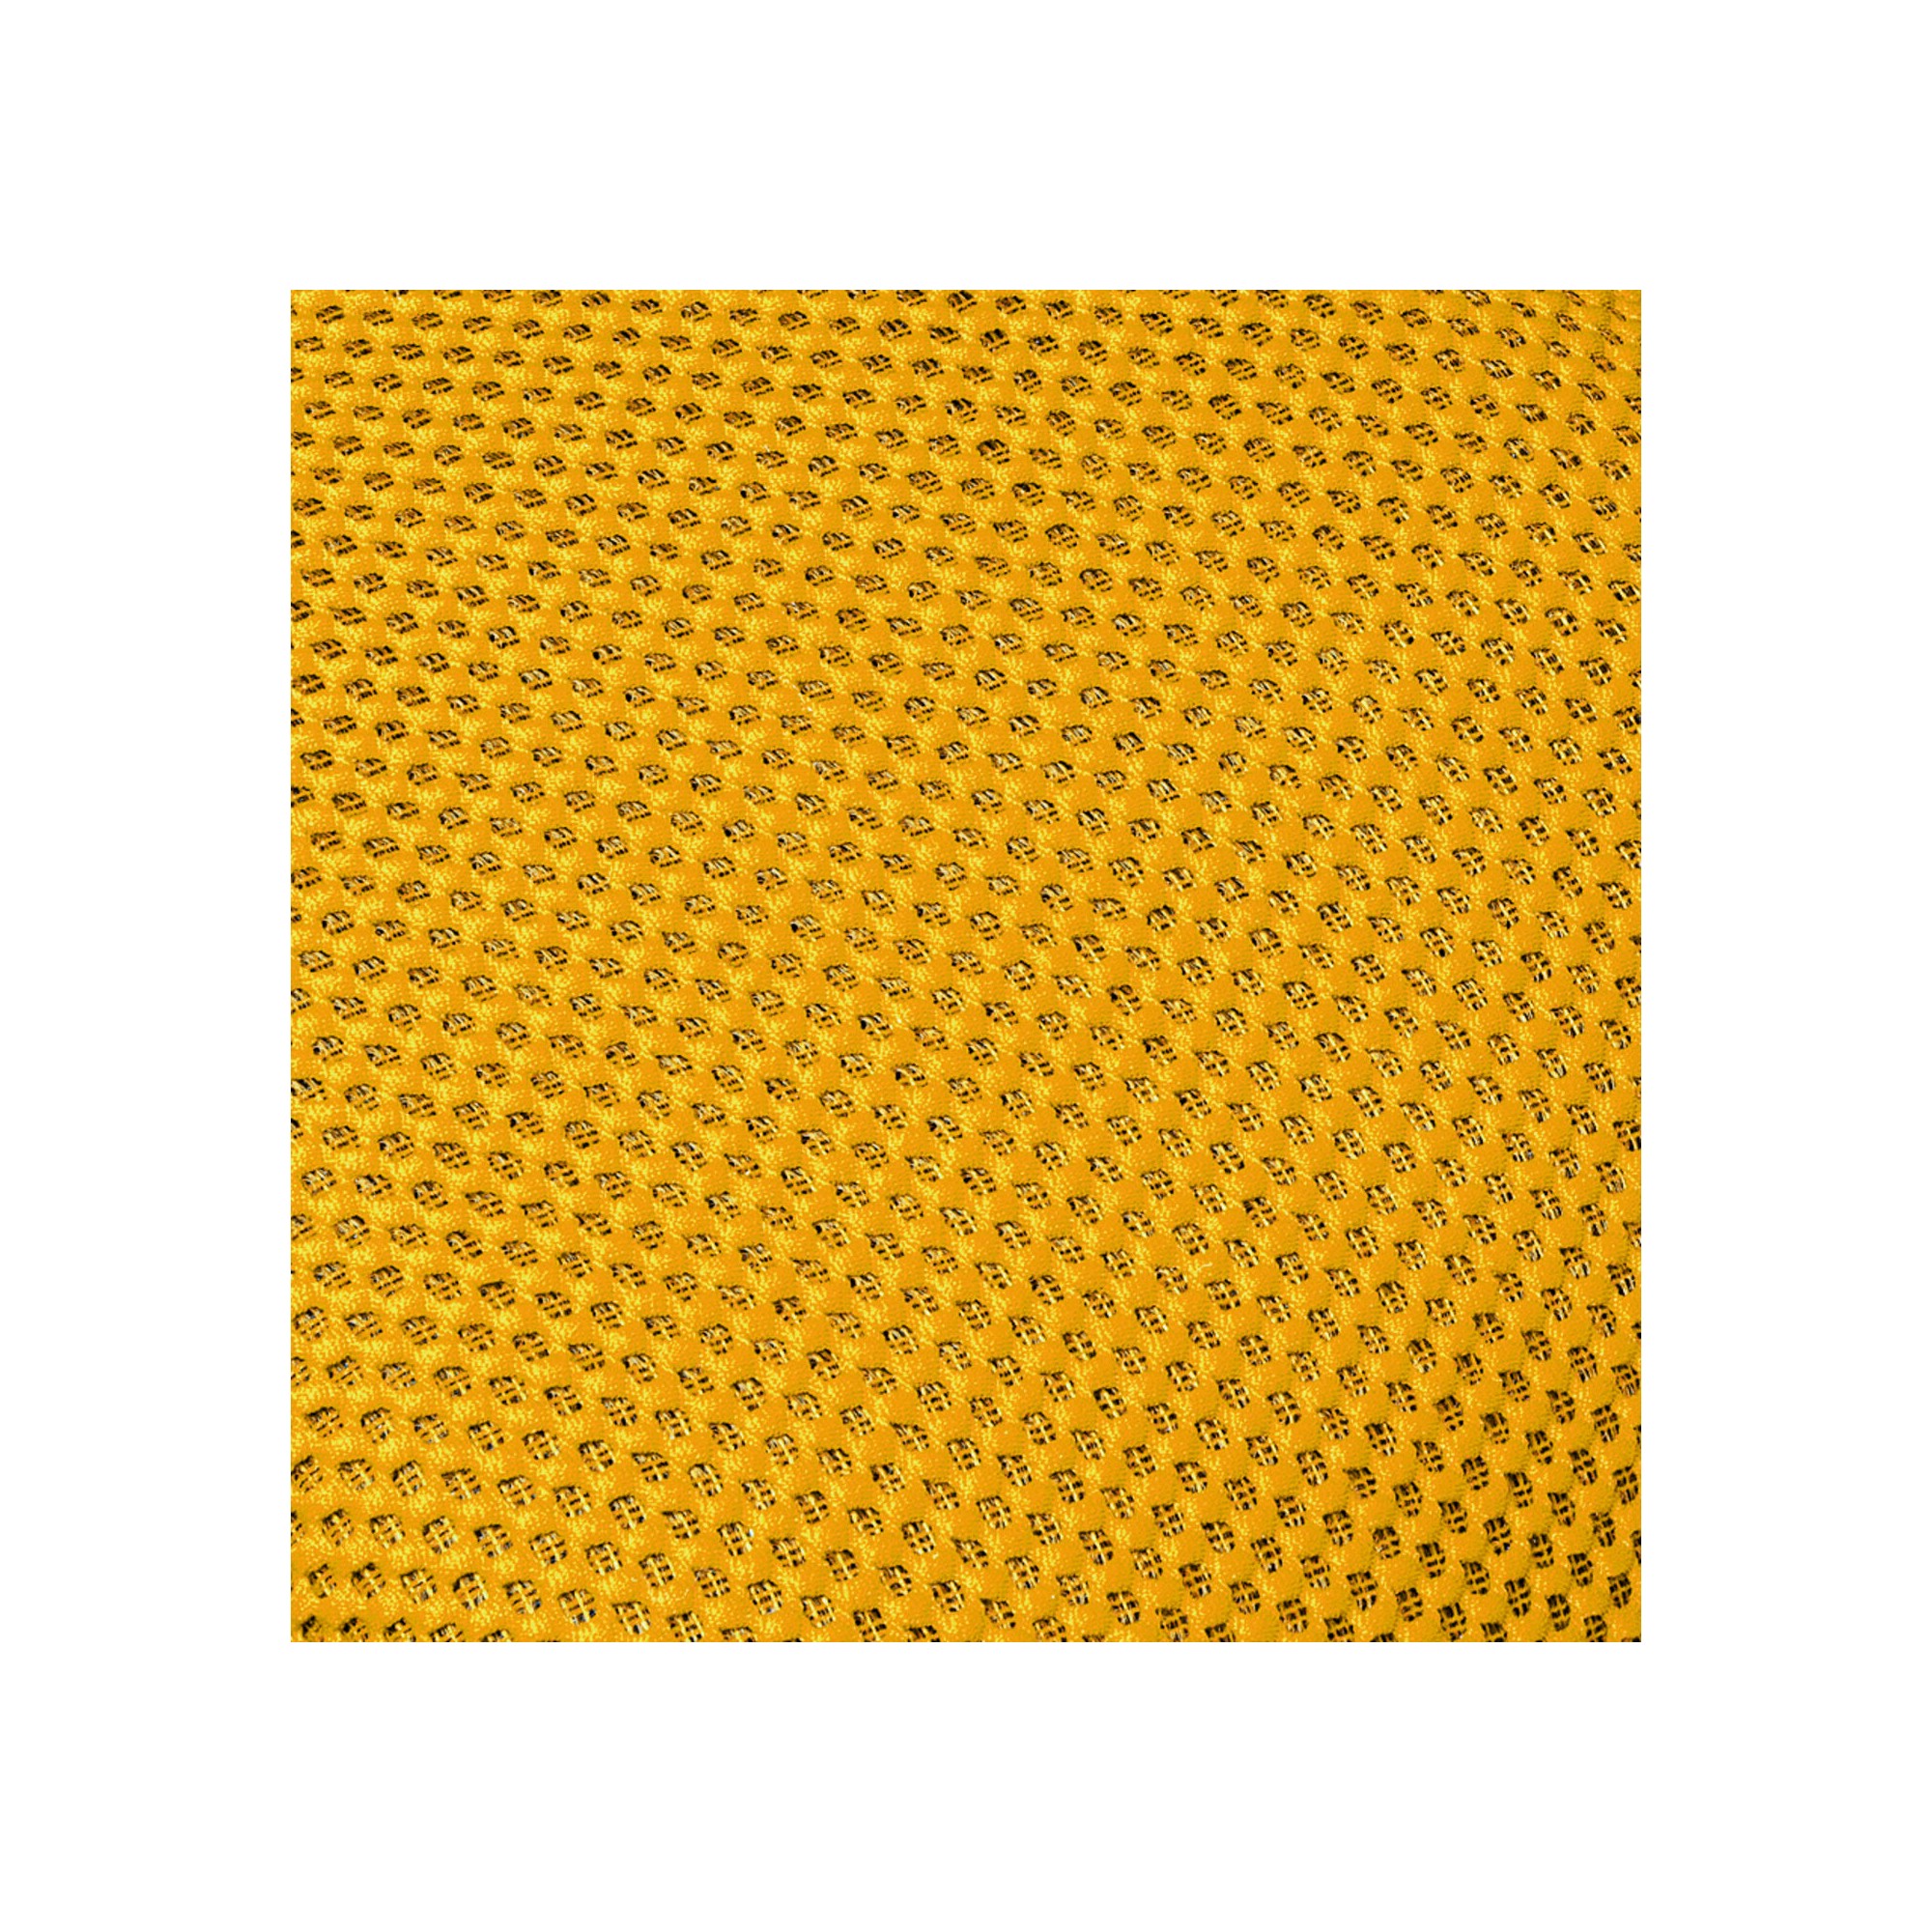 Echantillon tissu Peppo jaune 10x10cm